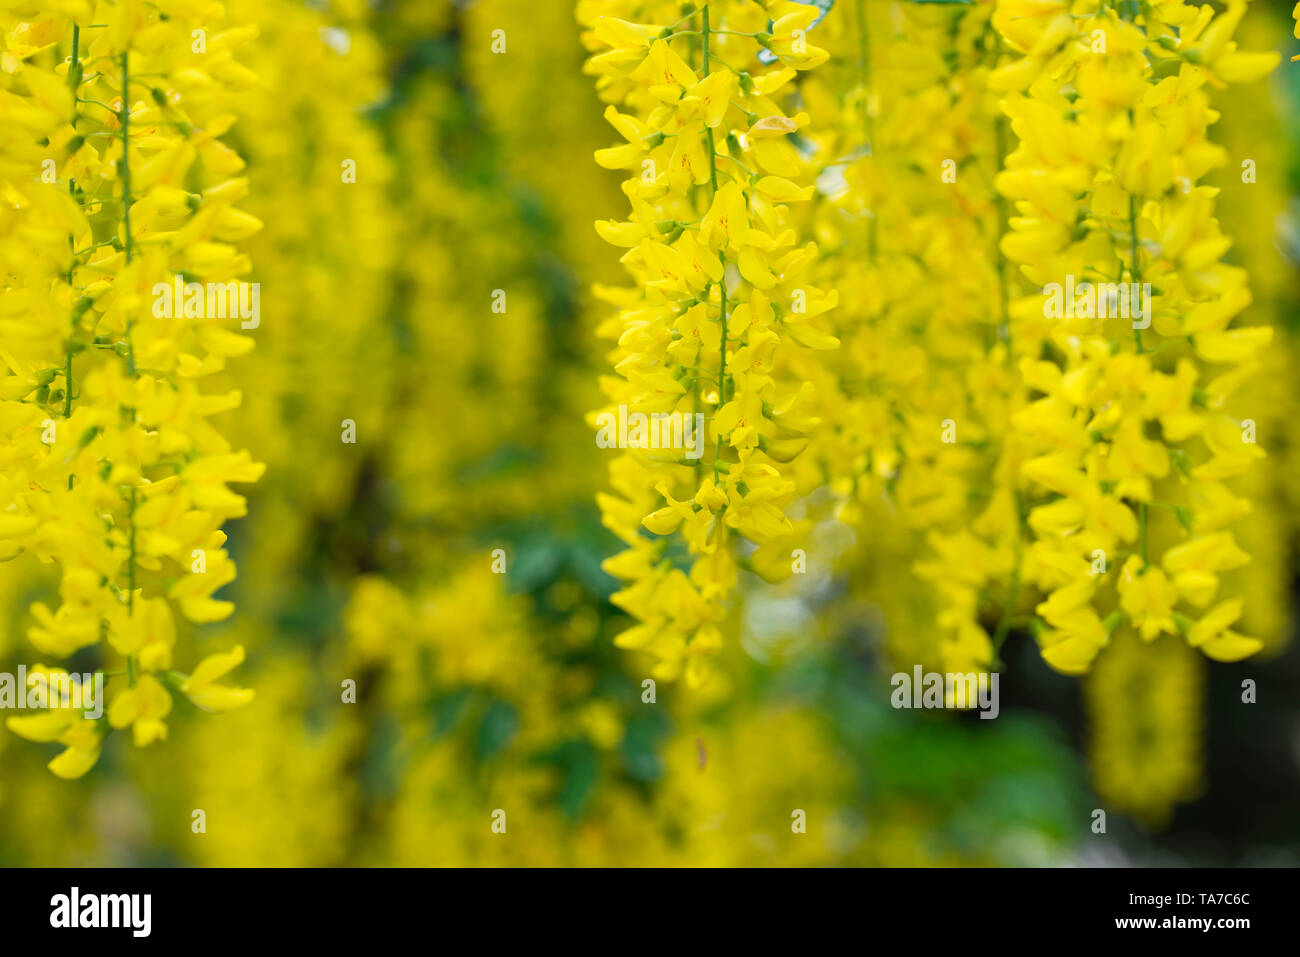 yellow laburnum anagyroides,common laburnum, golden chain or golden rain flowers closeup Stock Photo